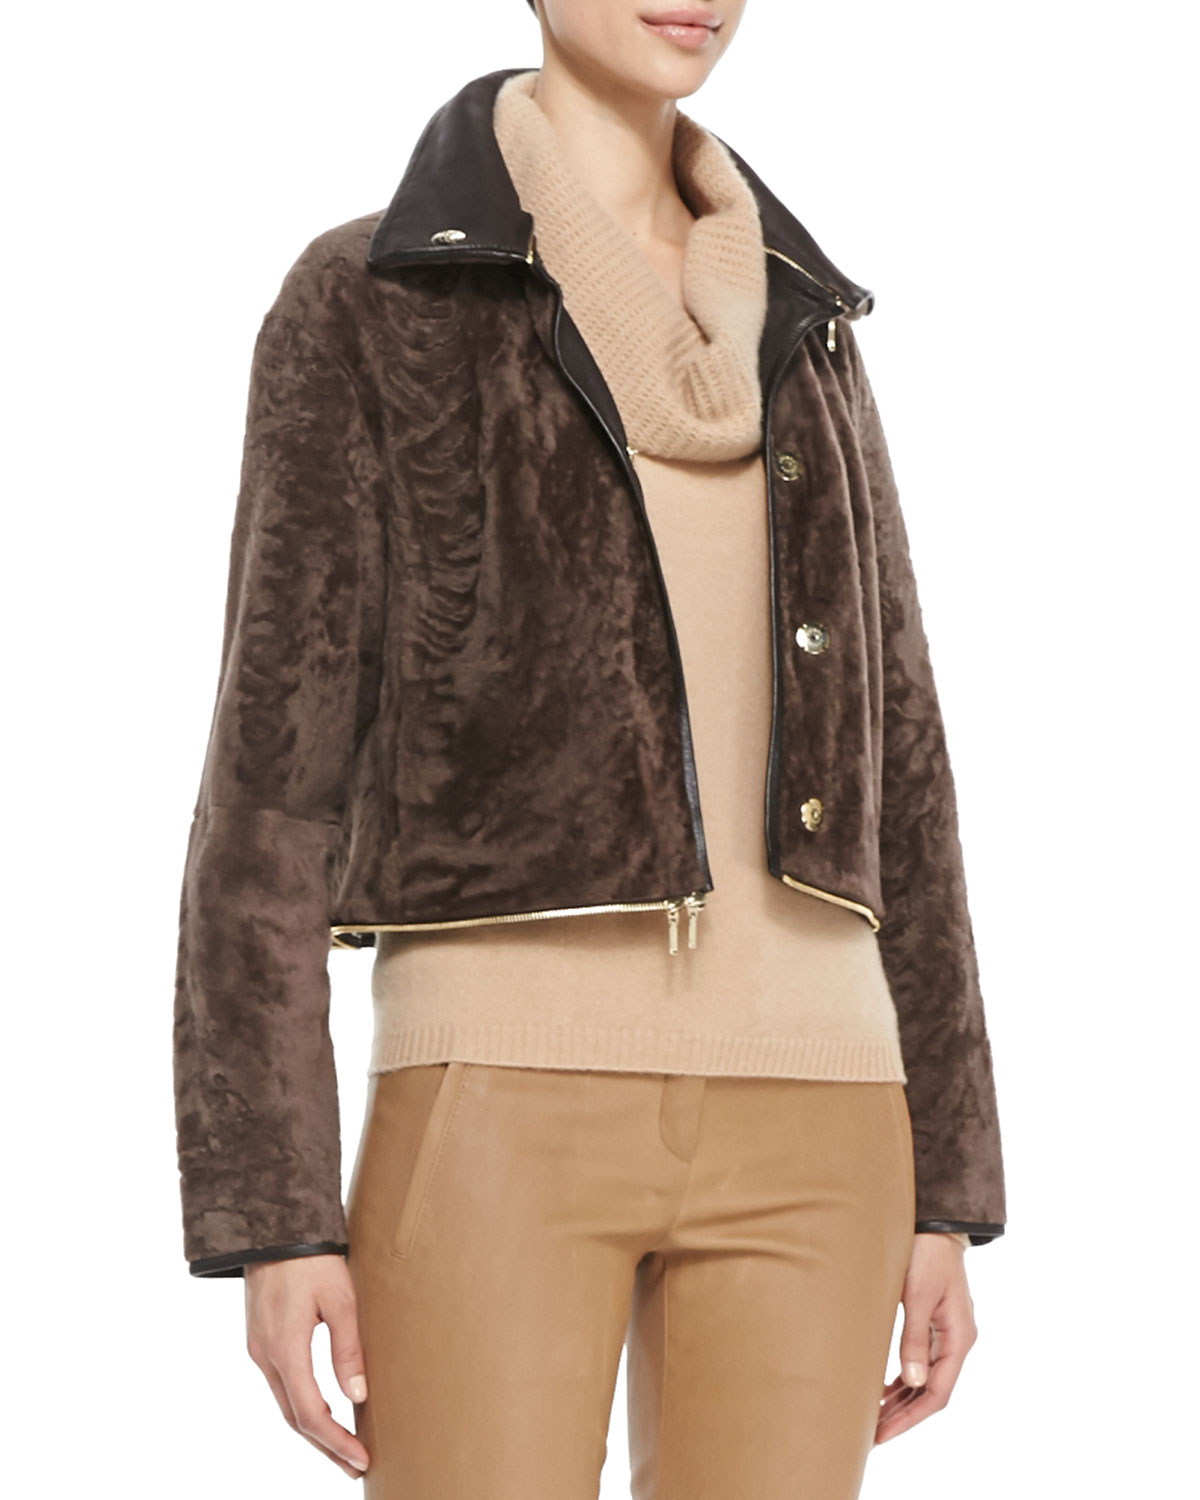 Lyst - Escada Fur Jacket With Zip-Off Bottom in Brown